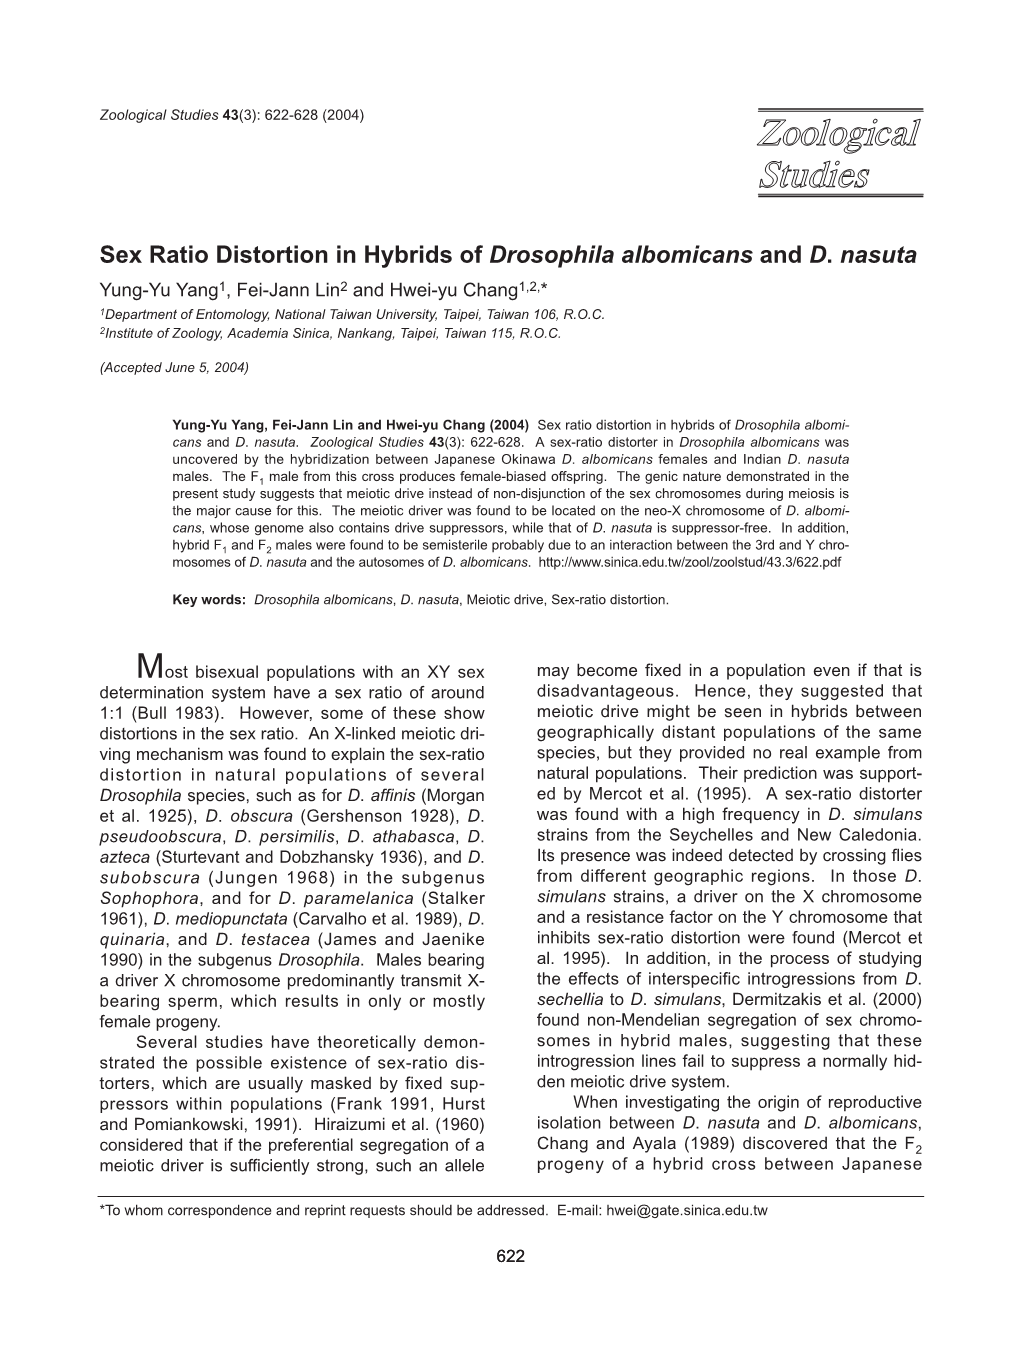 Sex Ratio Distortion in Hybrids of Drosophila Albomicans and D. Nasuta